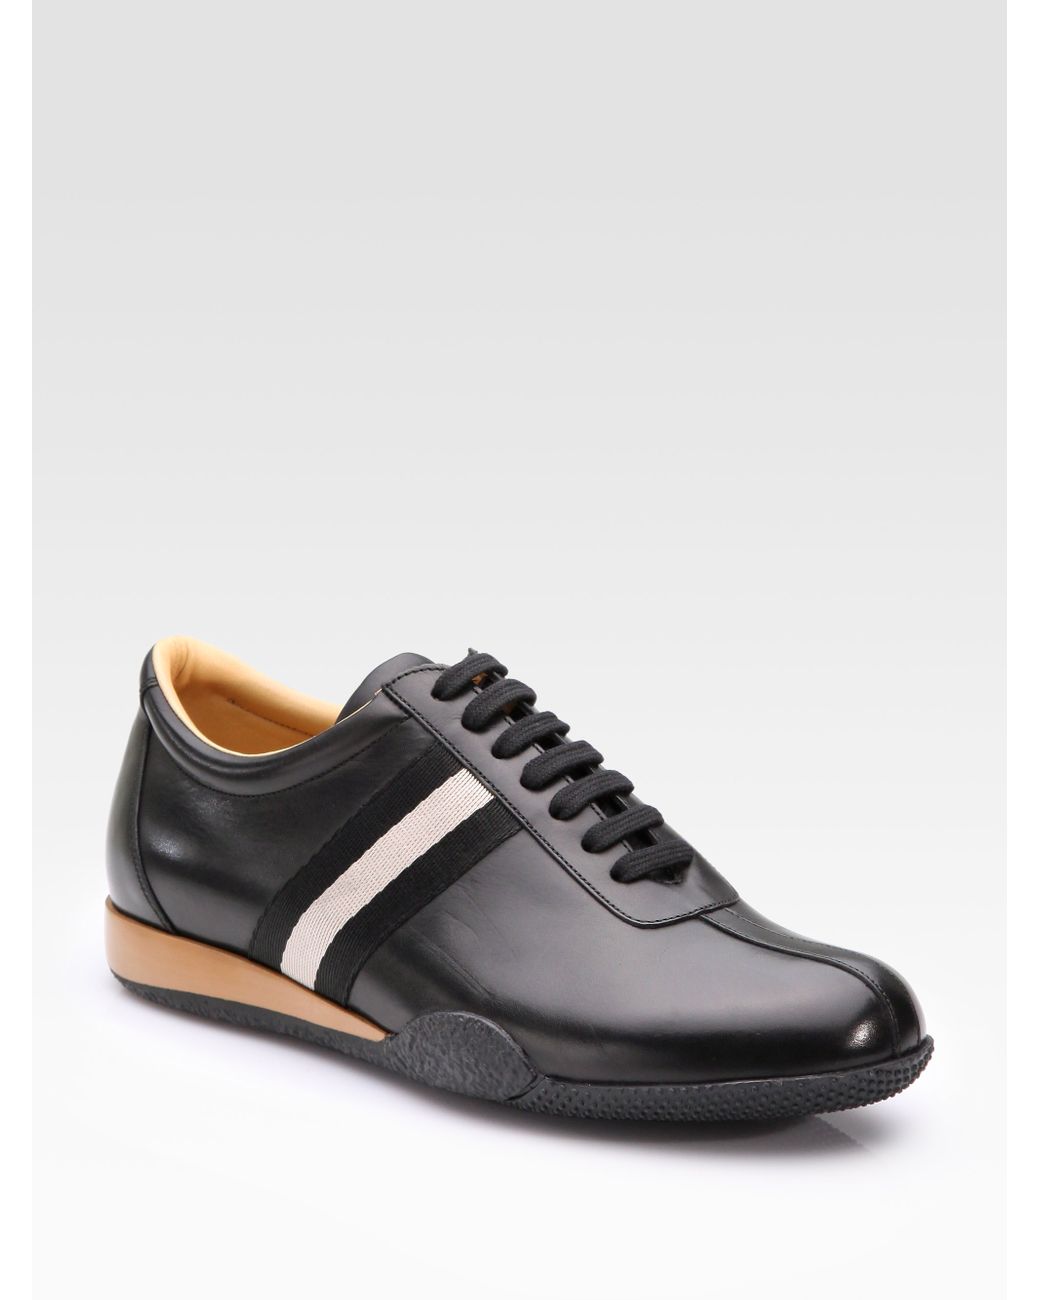 Bally Leather Freenew Sneakers in Black for Men | Lyst